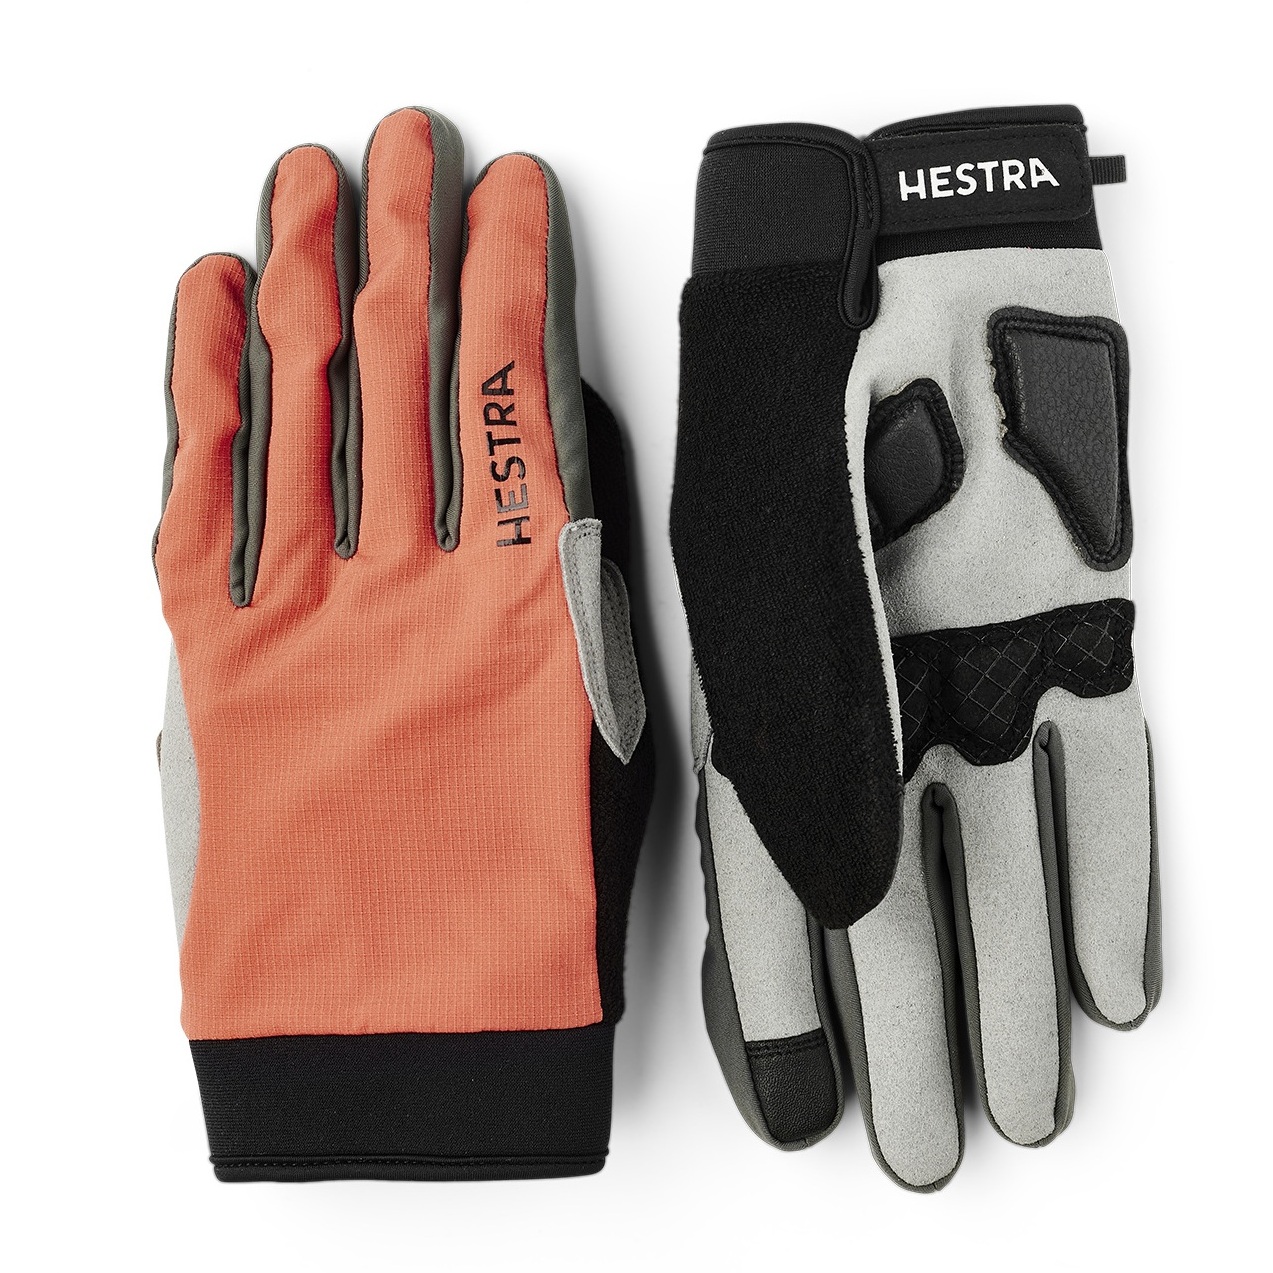 Produktbild von Hestra Bike Guard Long - 5 Finger Fahrradhandschuhe - orange